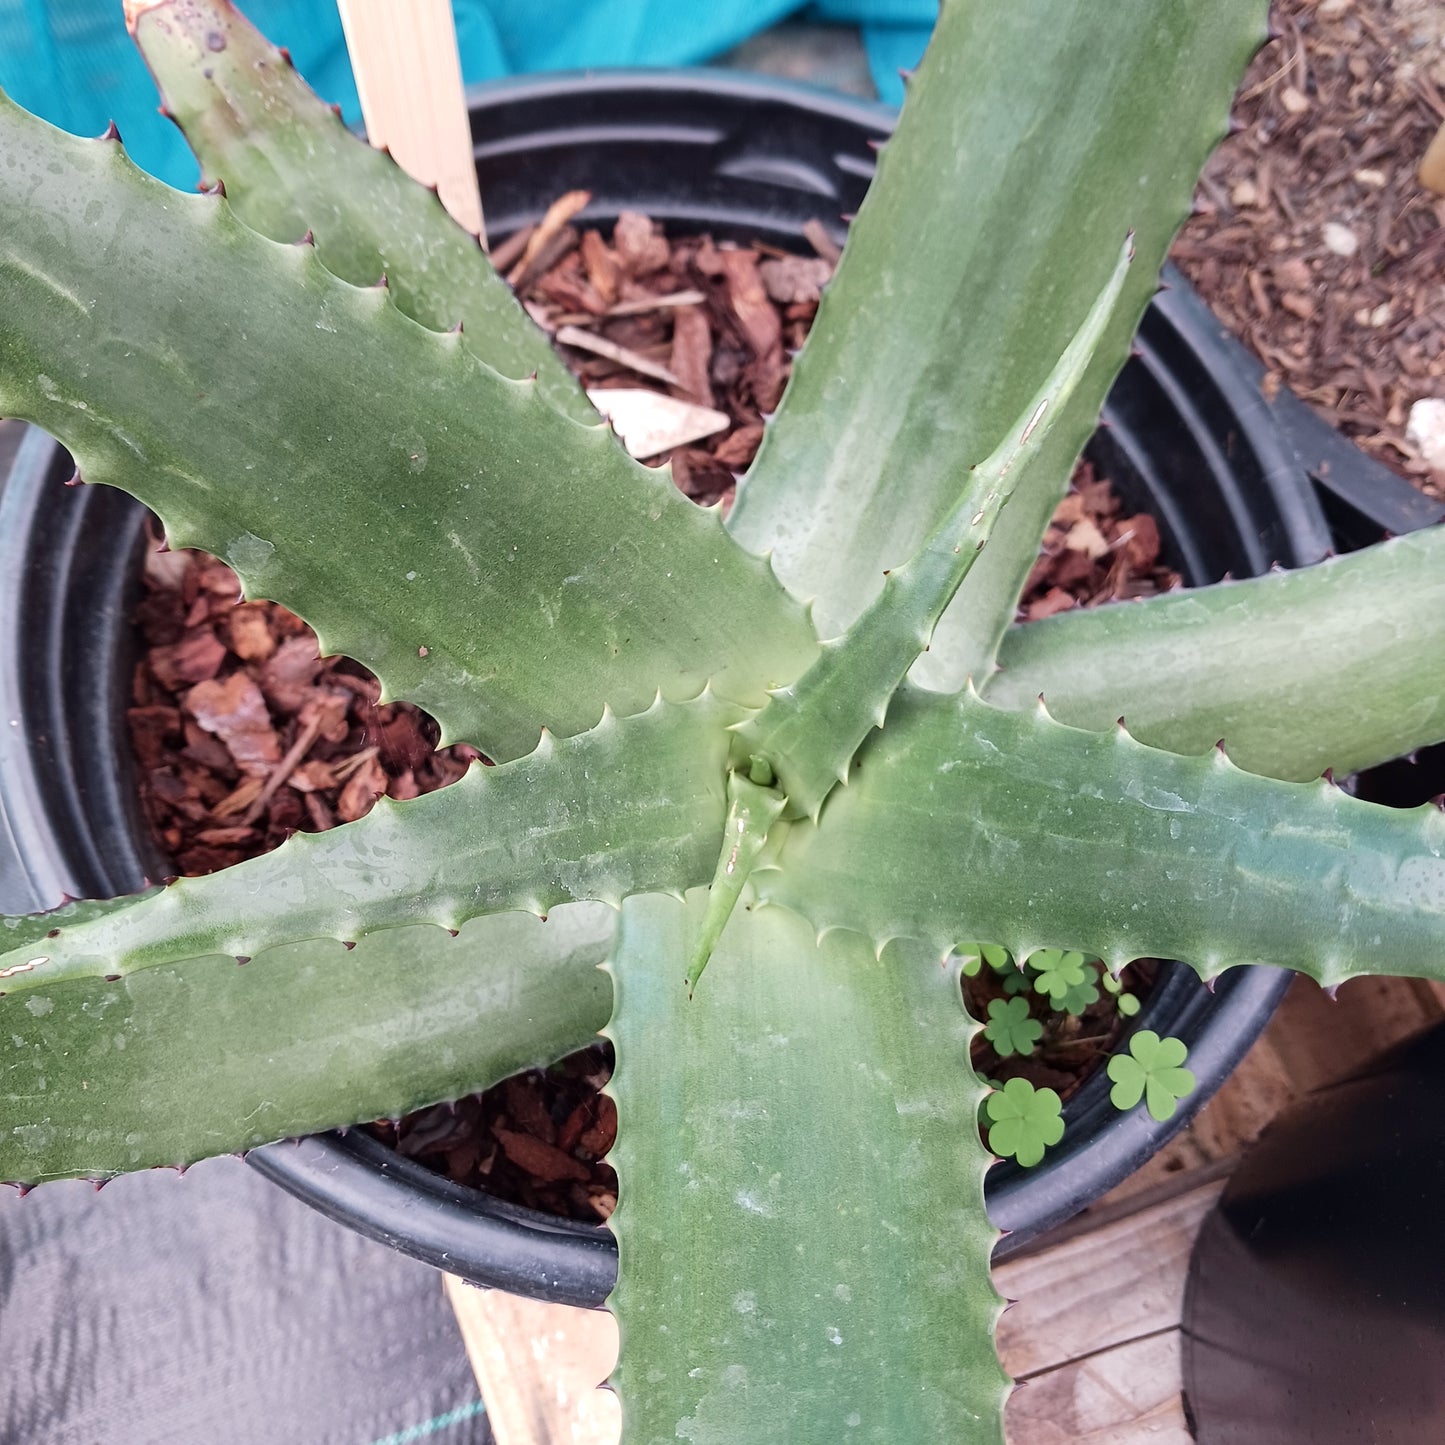 Aloe secundiflora - 5ga